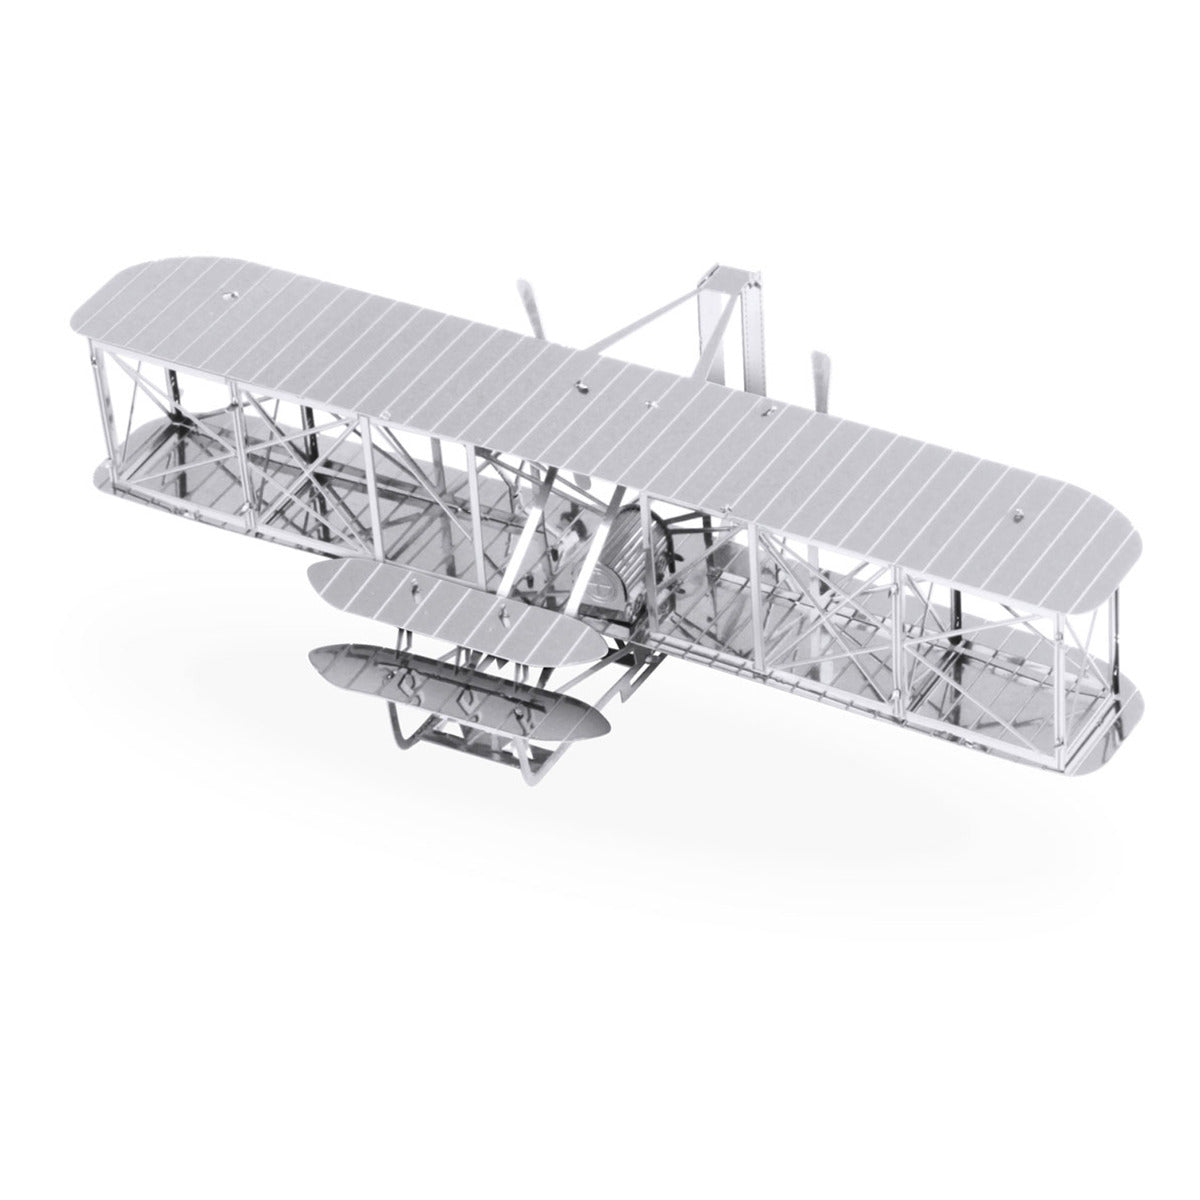 Metal Earth Wright Brothers Airplane Flugzeug MMS042 3D Figur Metallbausatz